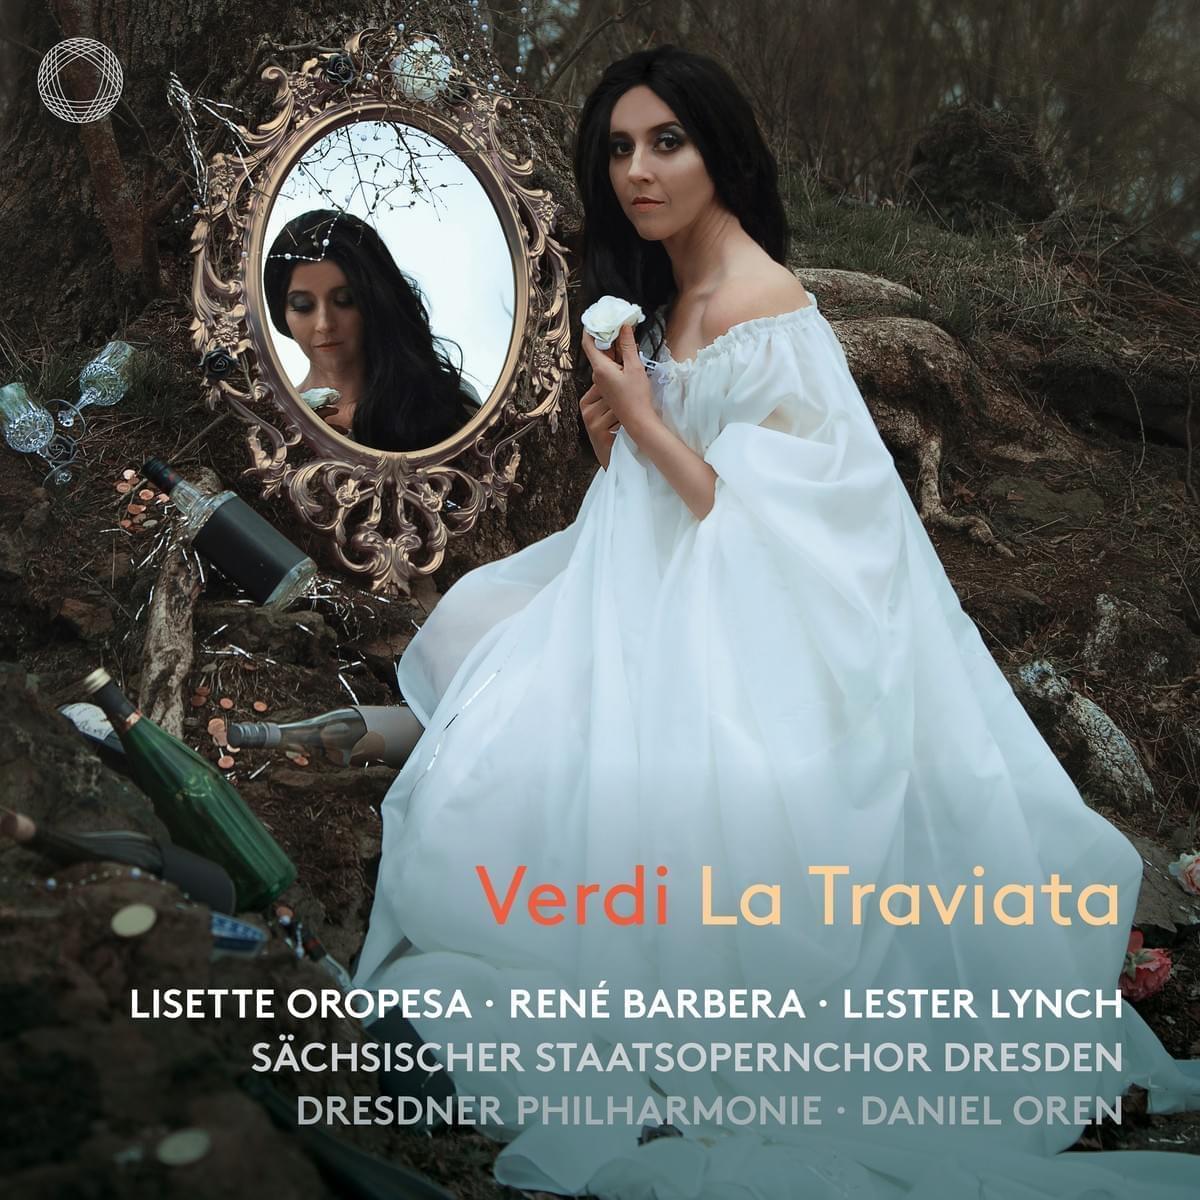 Lisette Oropesa in La traviata, a new release from Pentatone and San Francisco Classical Recording Company